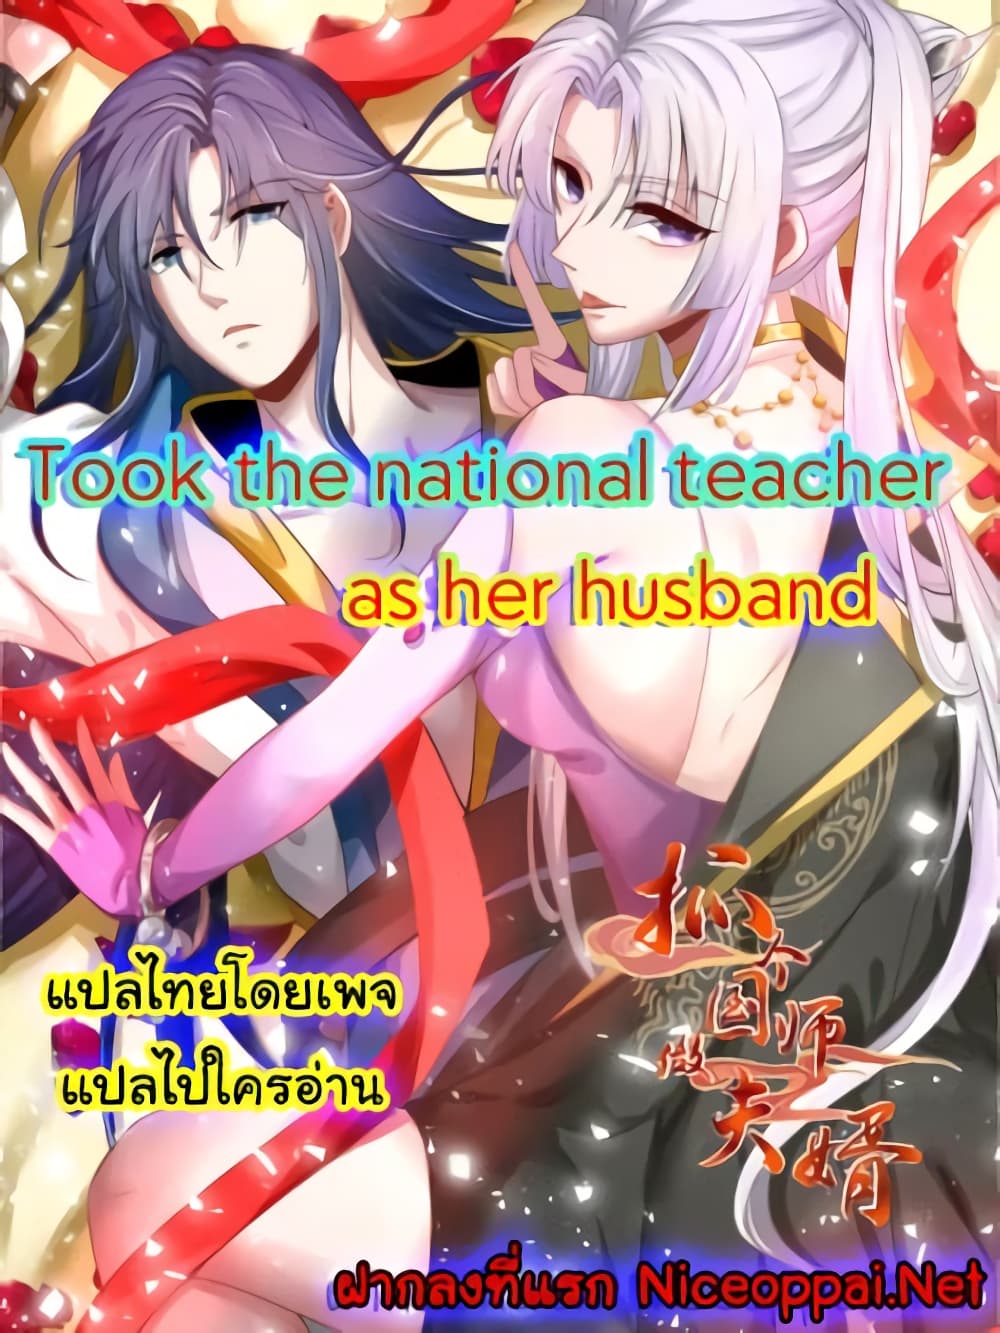 Took the National Teacher as Her Husband5 (1)